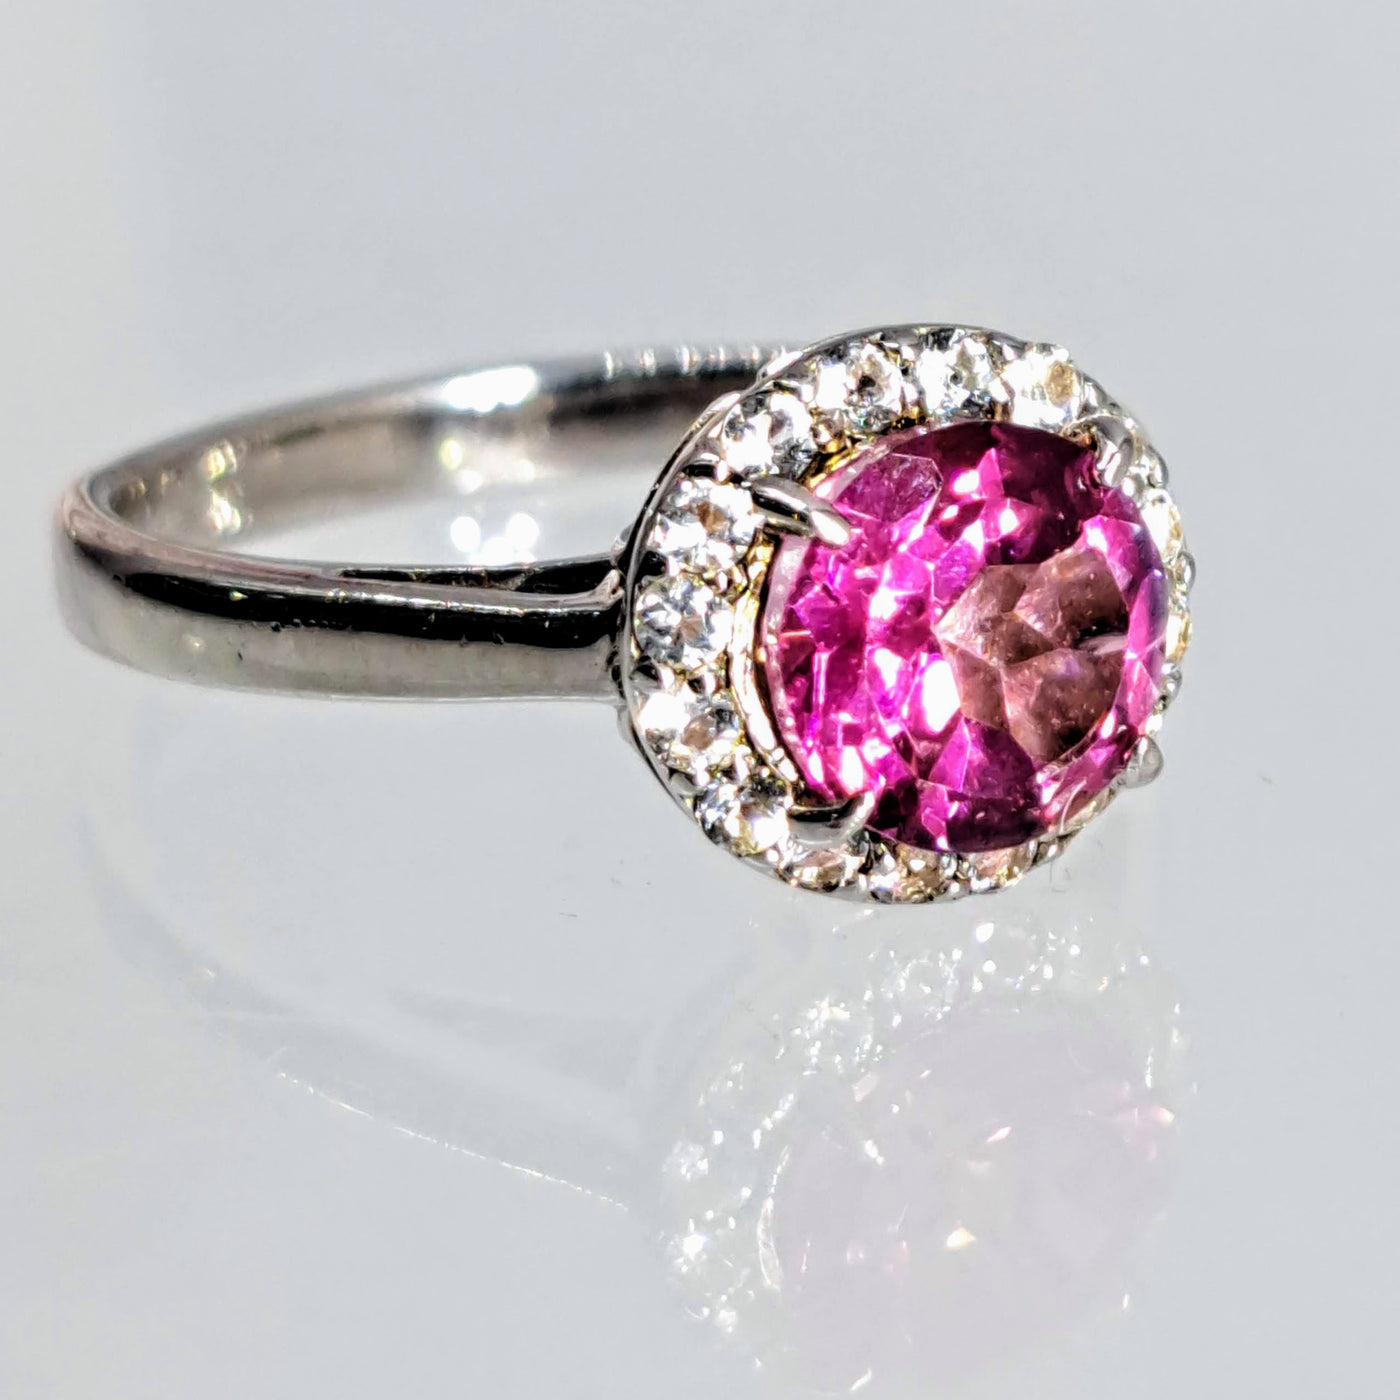 "My Precious" Sz 6 Ring - Pink Topaz, Zircon Stone, Anti-tarnish Sterling